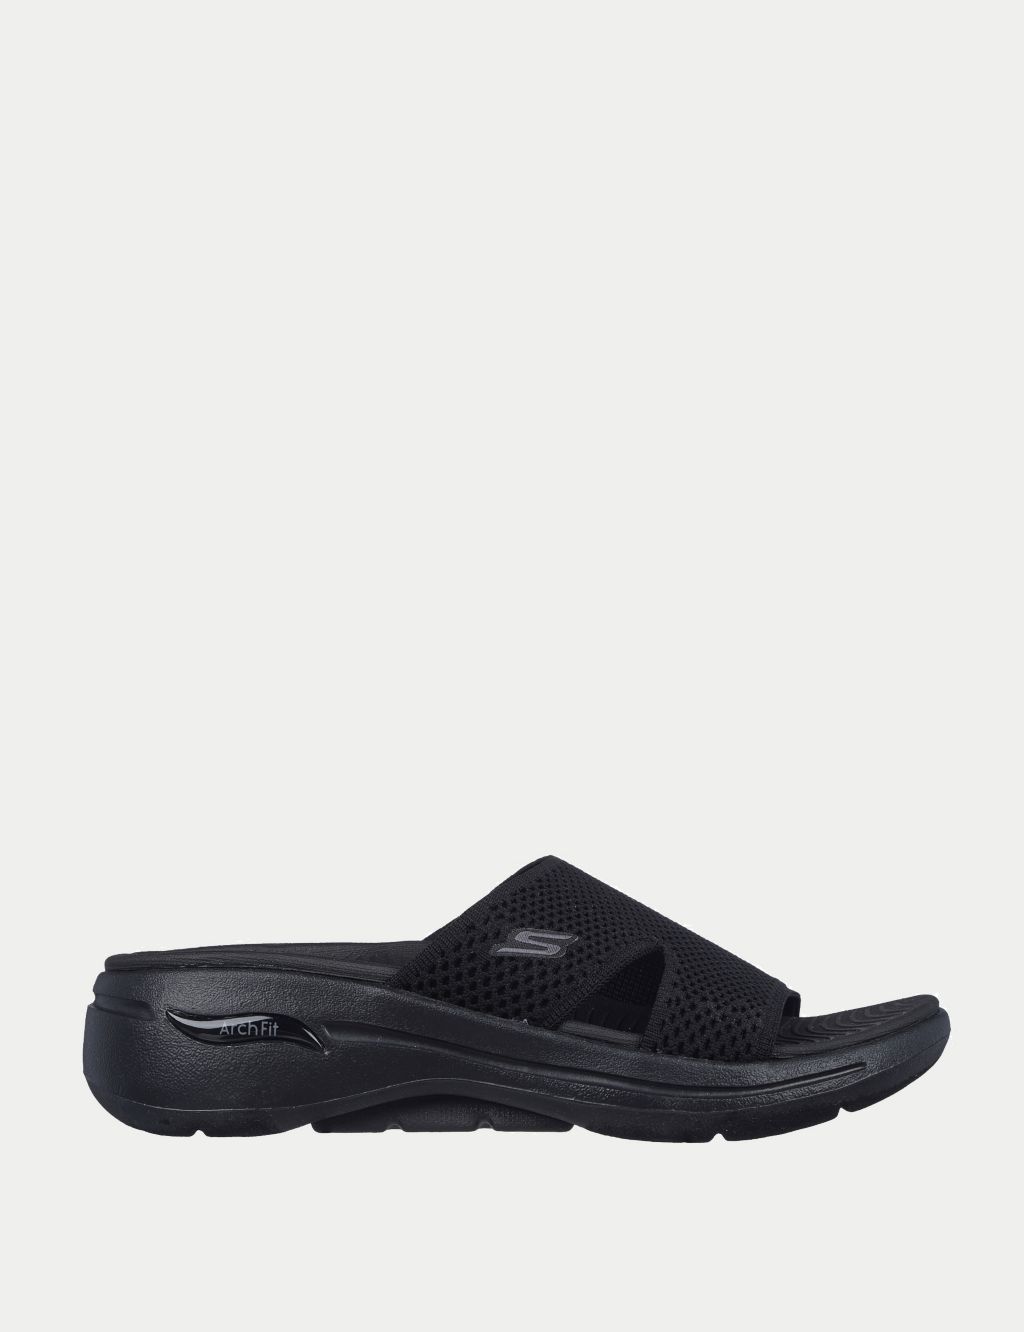 GO WALK™ Arch Fit Flat Sandals